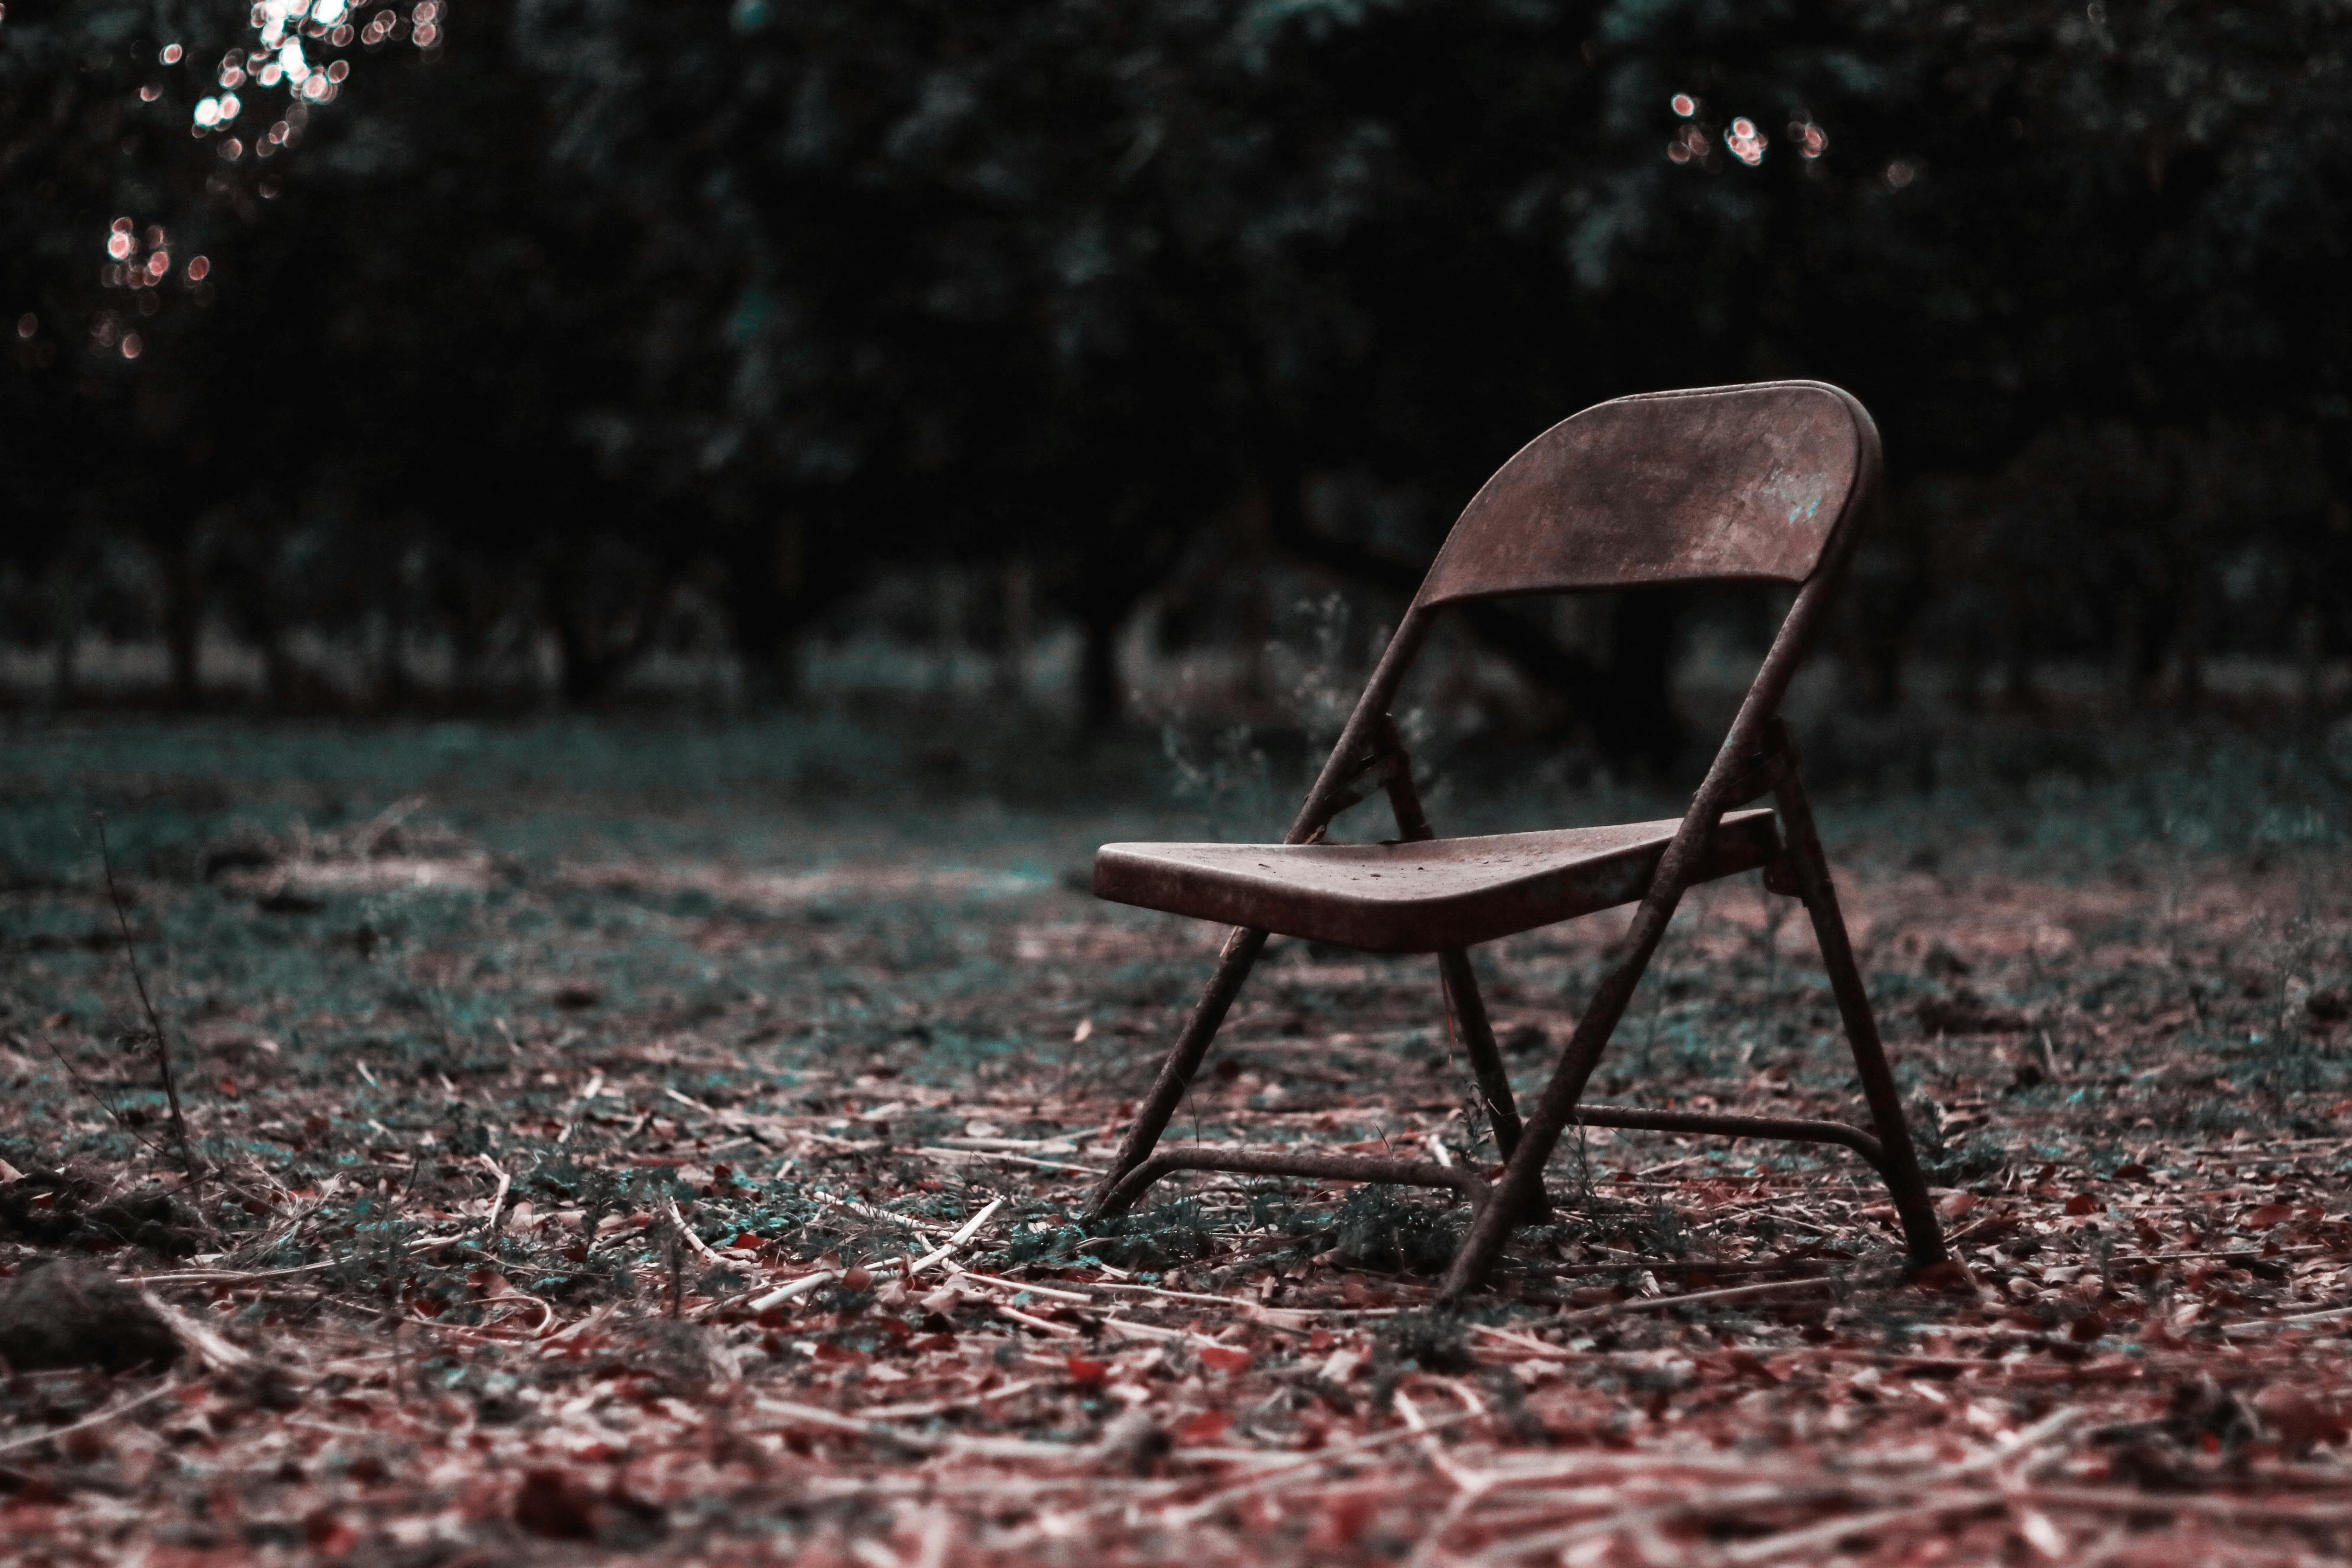 Rusty Folding Chair on Green Grass · Free Stock Photo